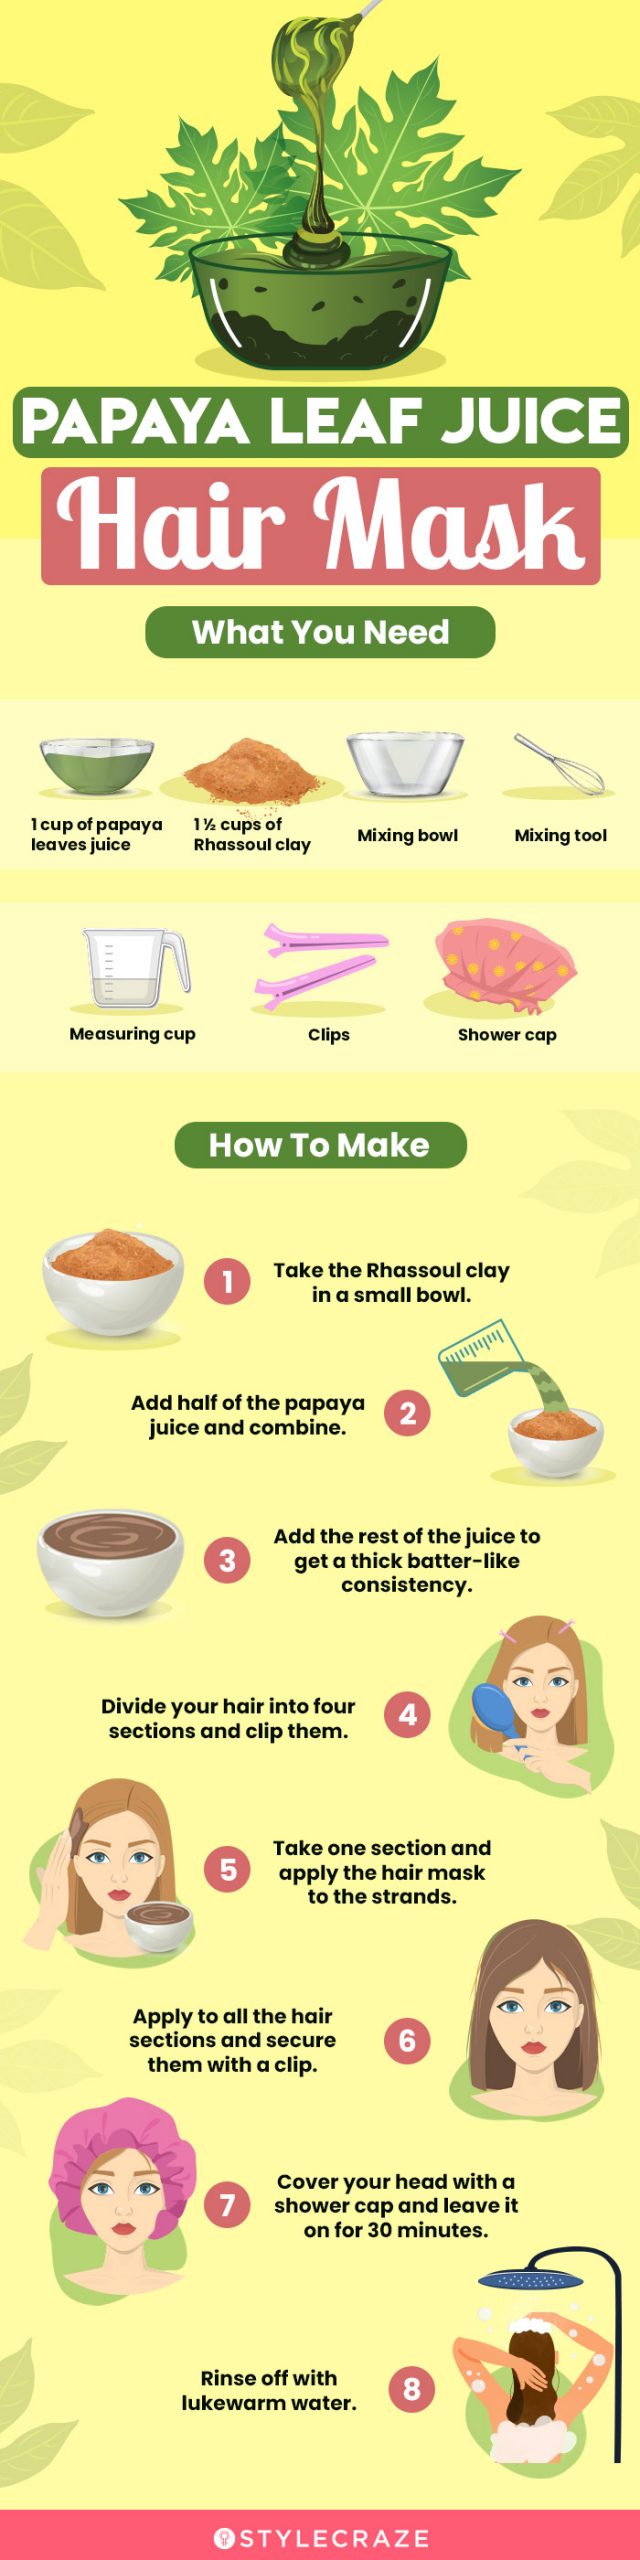 8 Benefits Of Papaya Leaf Juice, How To Make, & Side Effects